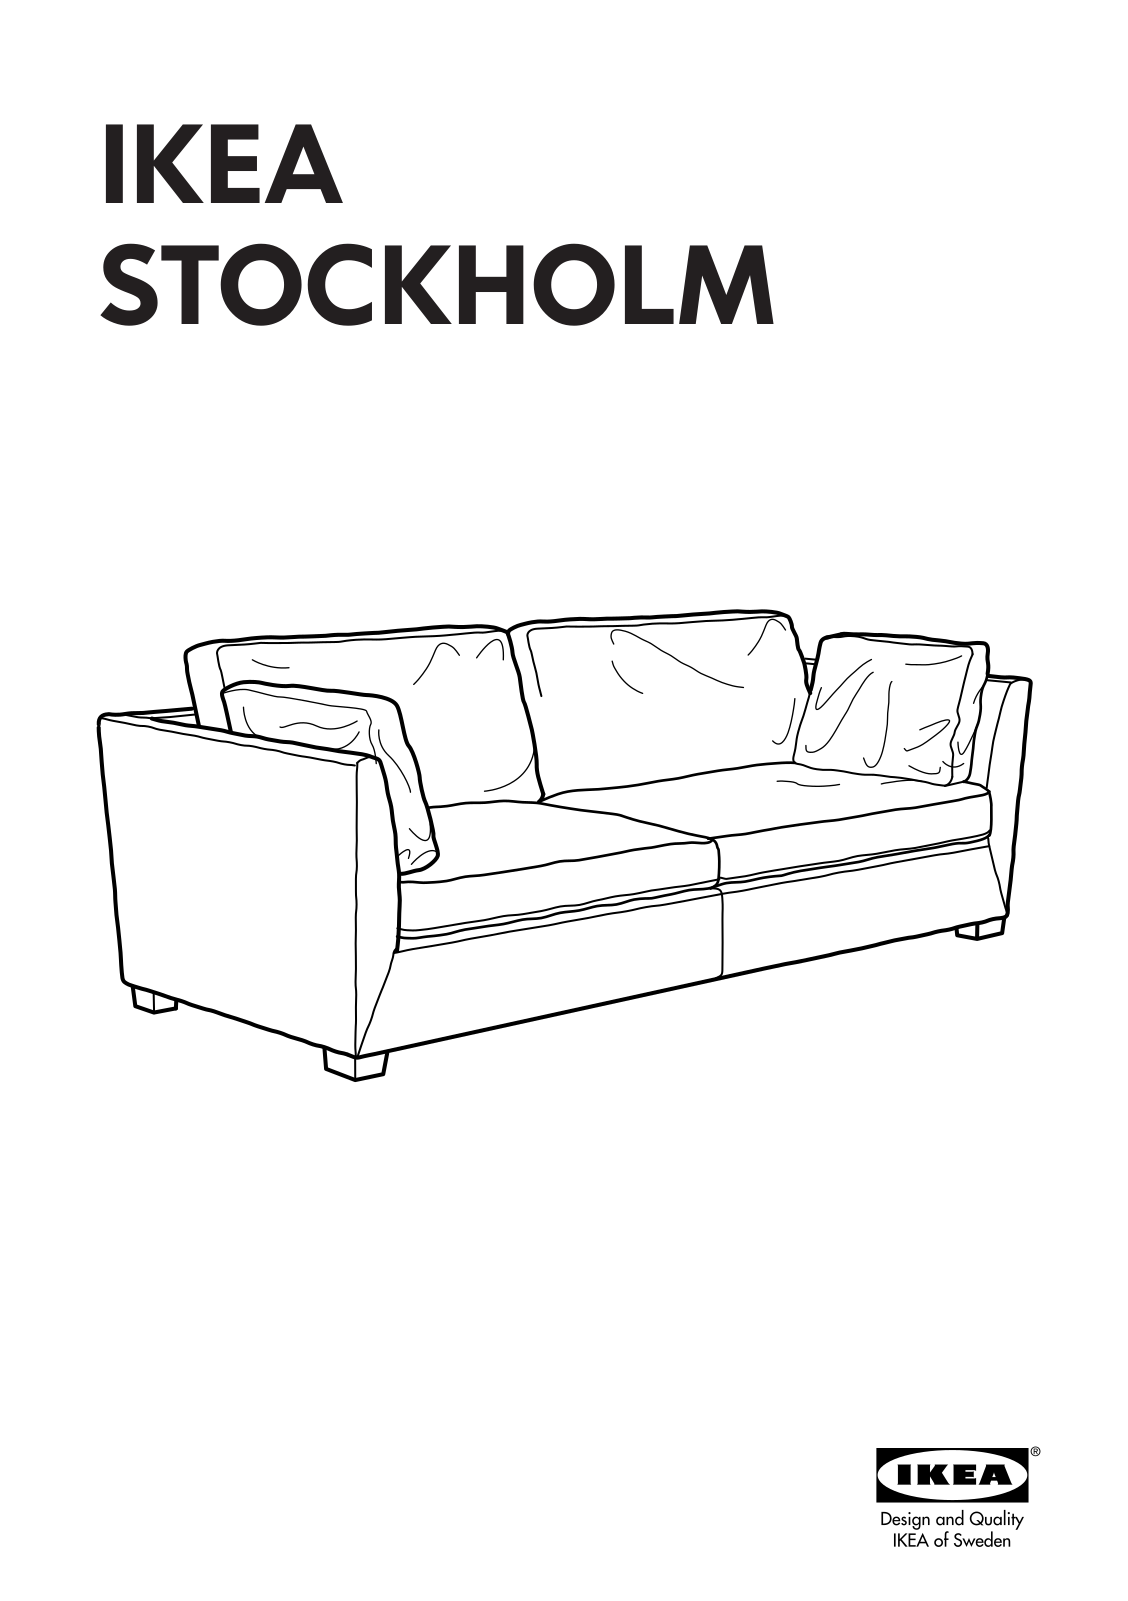 IKEA STOCKHOLM SOFA FRAME 3.5 SEAT Assembly Instruction